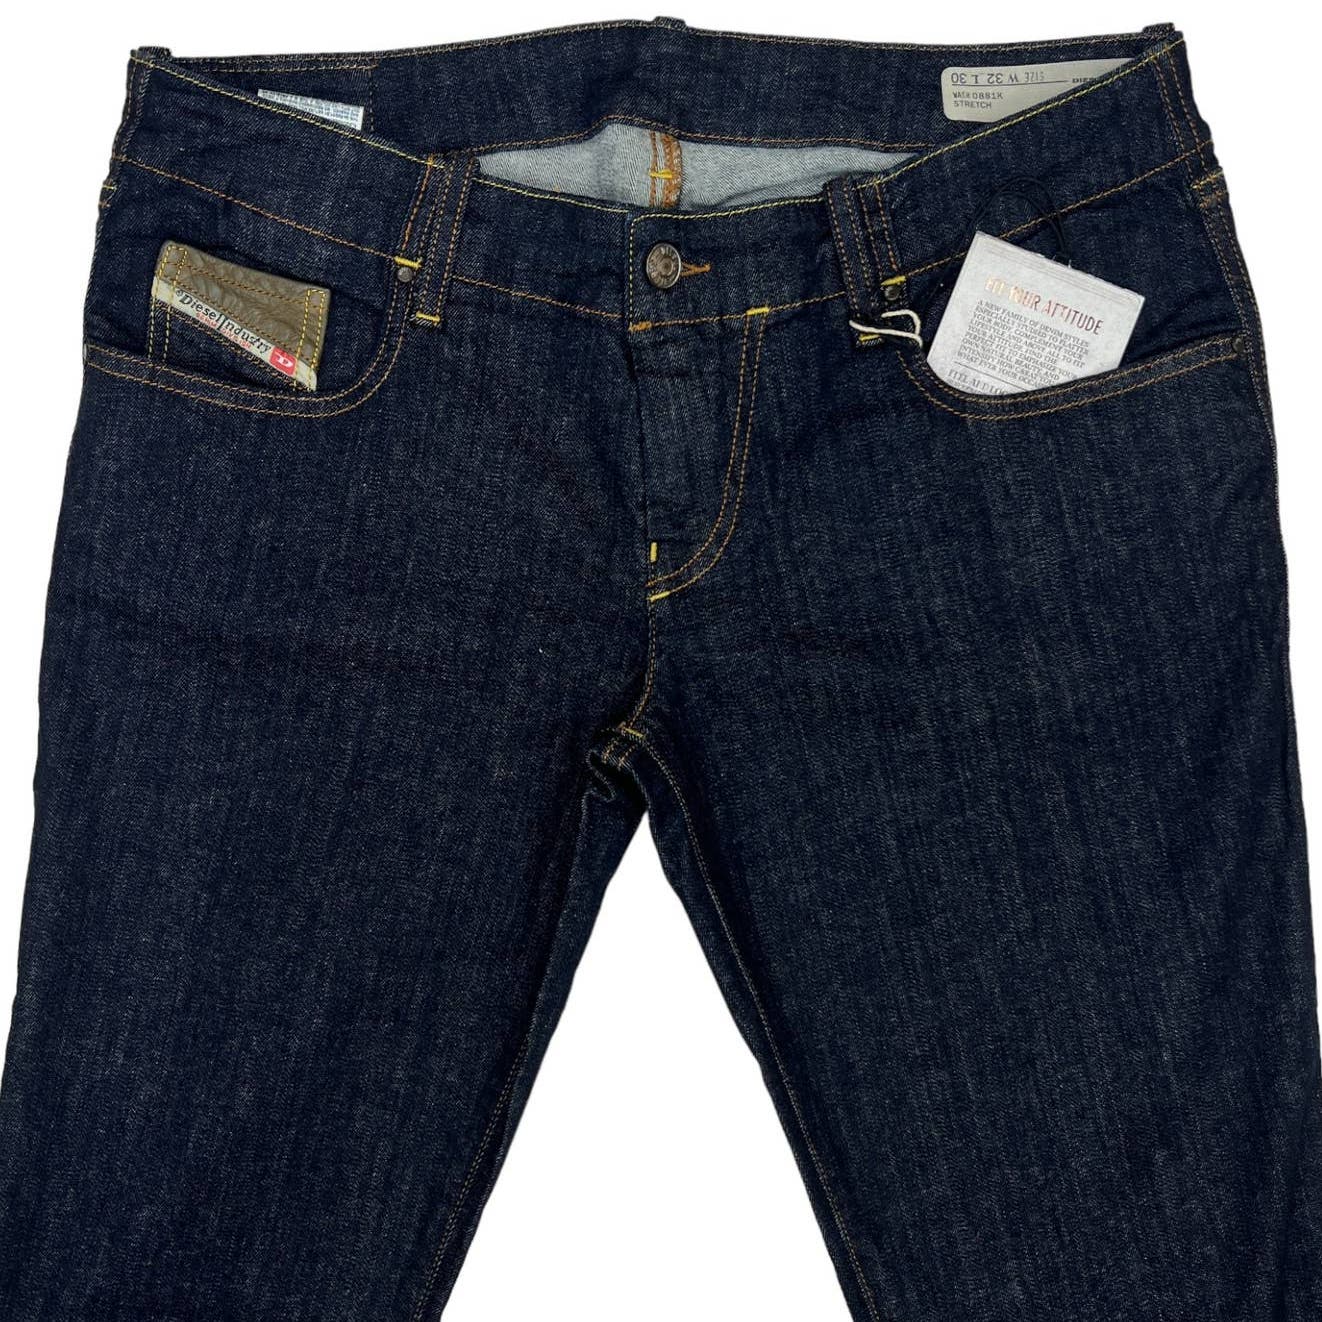 Diesel Women Denim Blue Jeans US 32 Wash Super Skinny